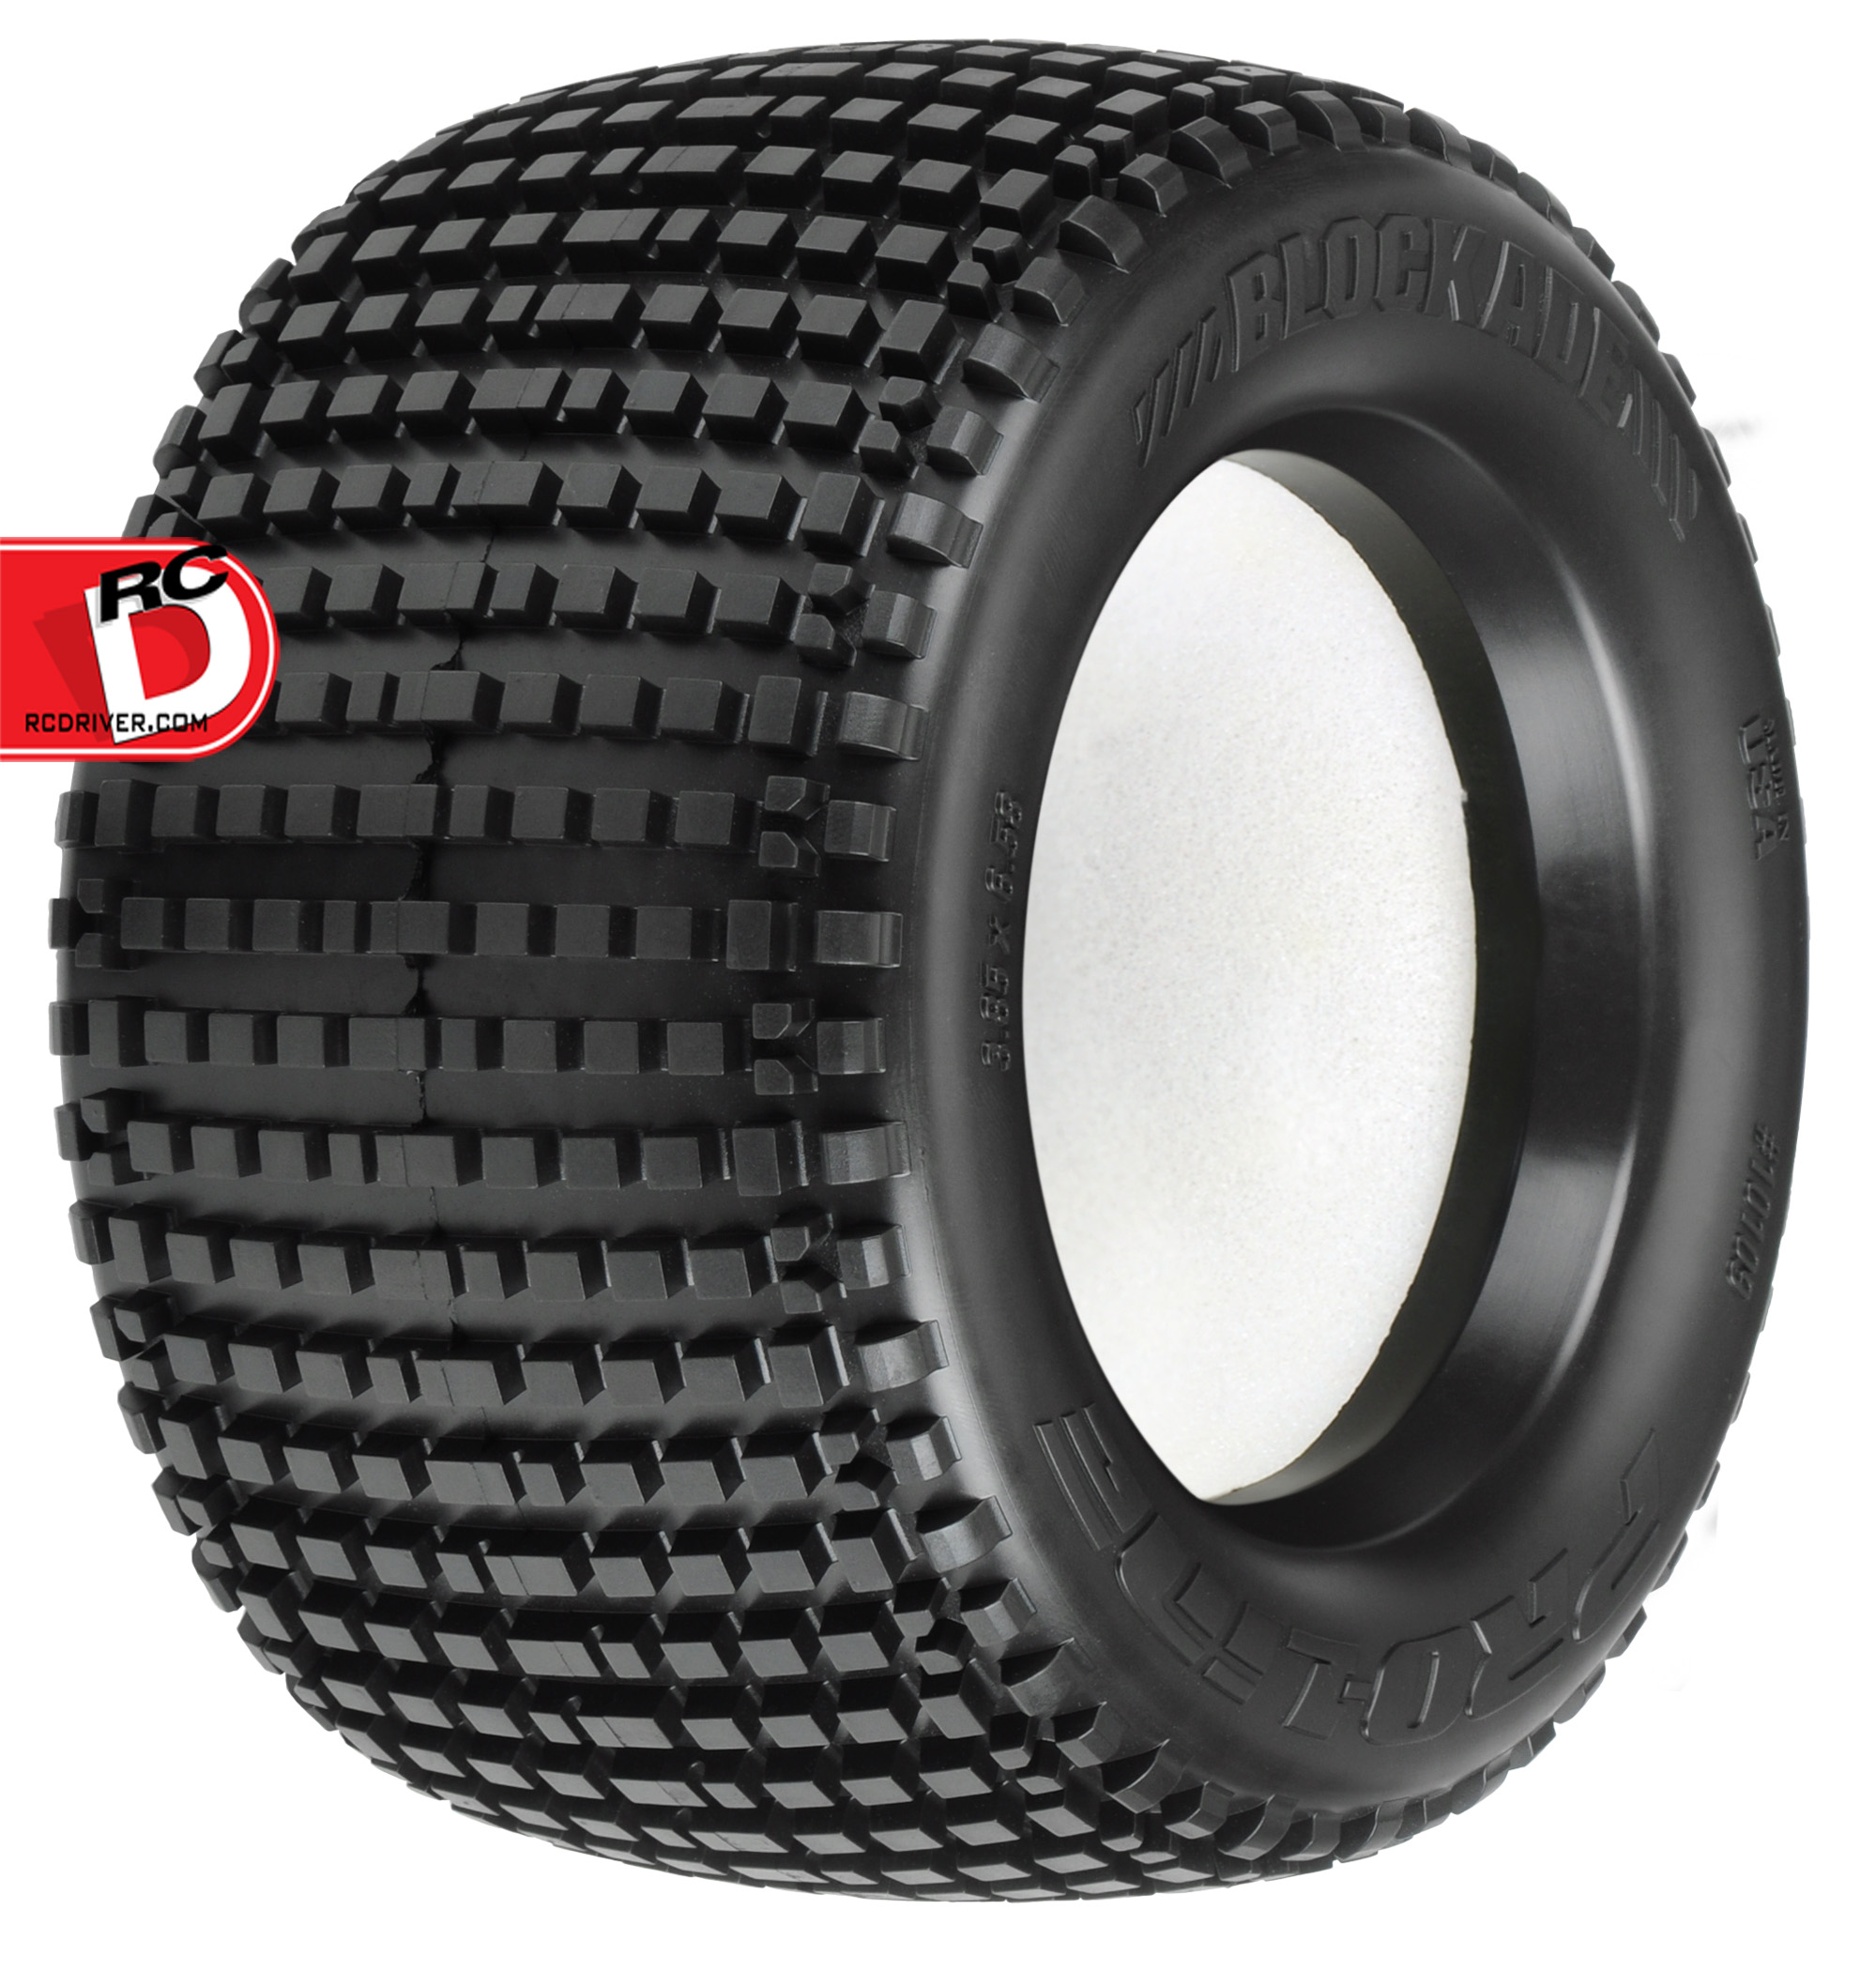 Pro-Line - Blockade 3.8 (Traxxas Style Bead) All Terrain Tires